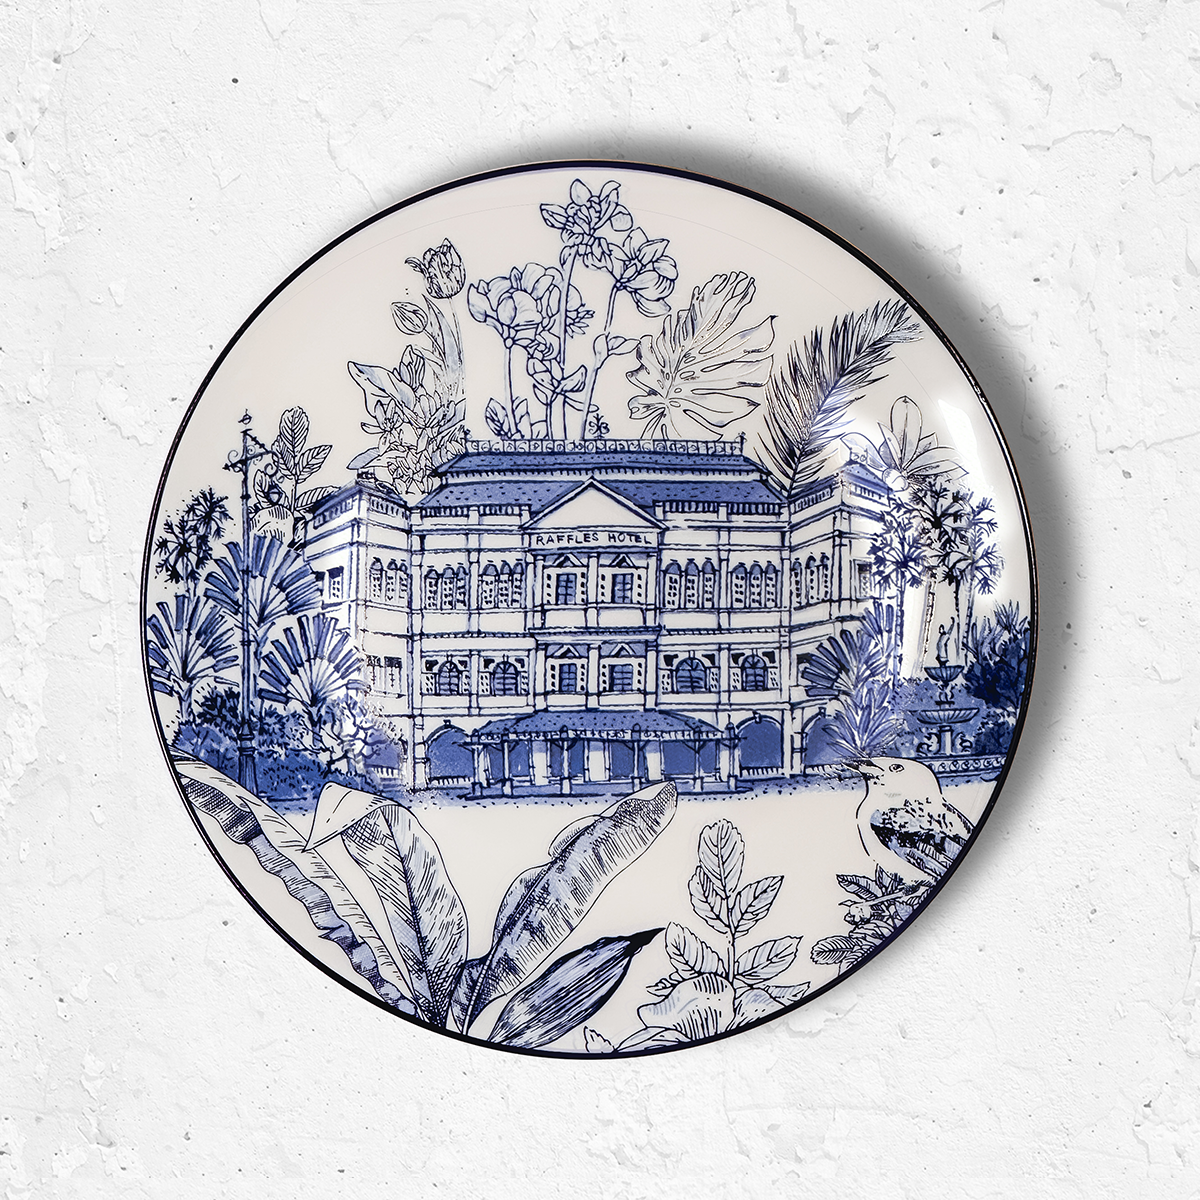 Singapore Themed Round Plates - Raffles Hotel 10"